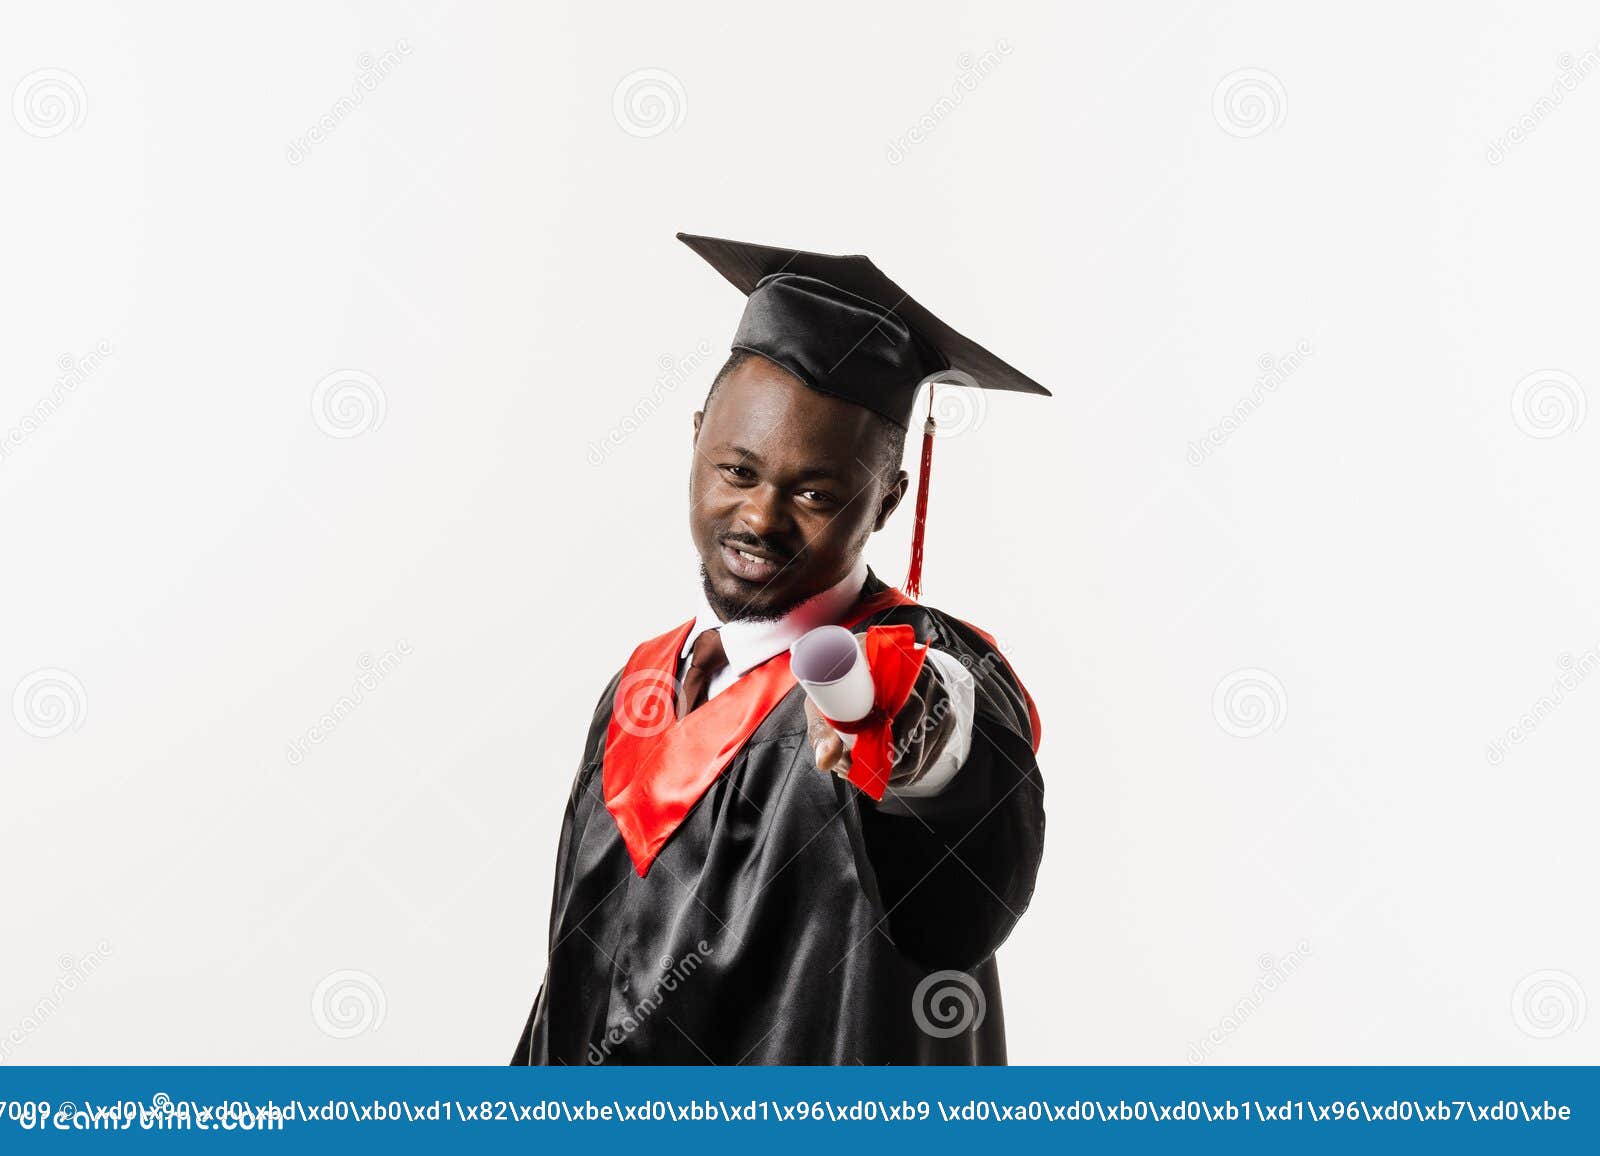 Black graduation cap and gown